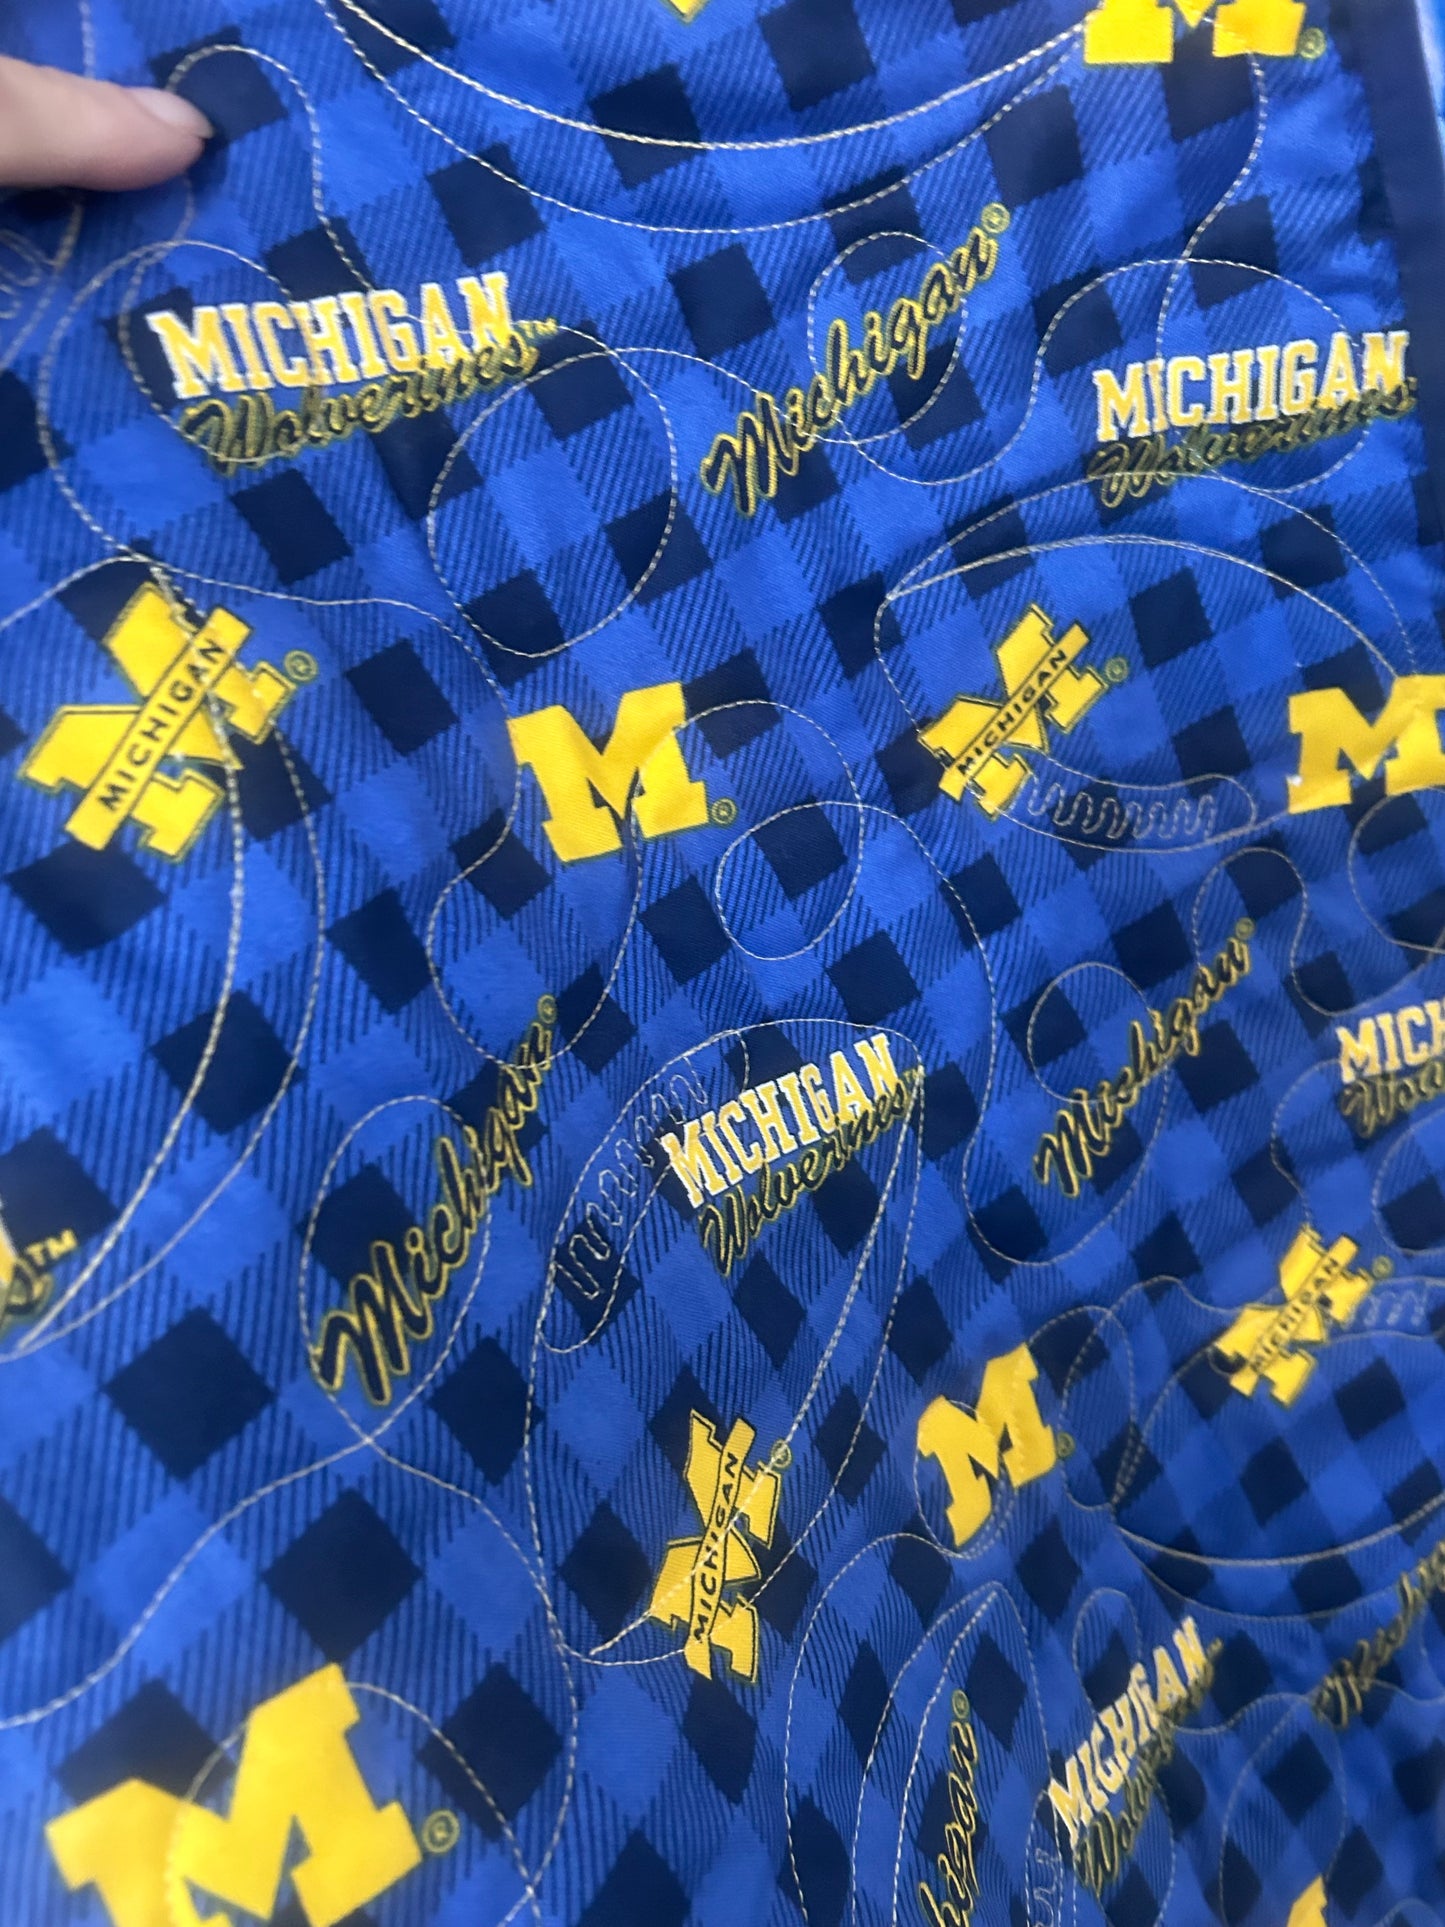 University of Michigan throw quilt